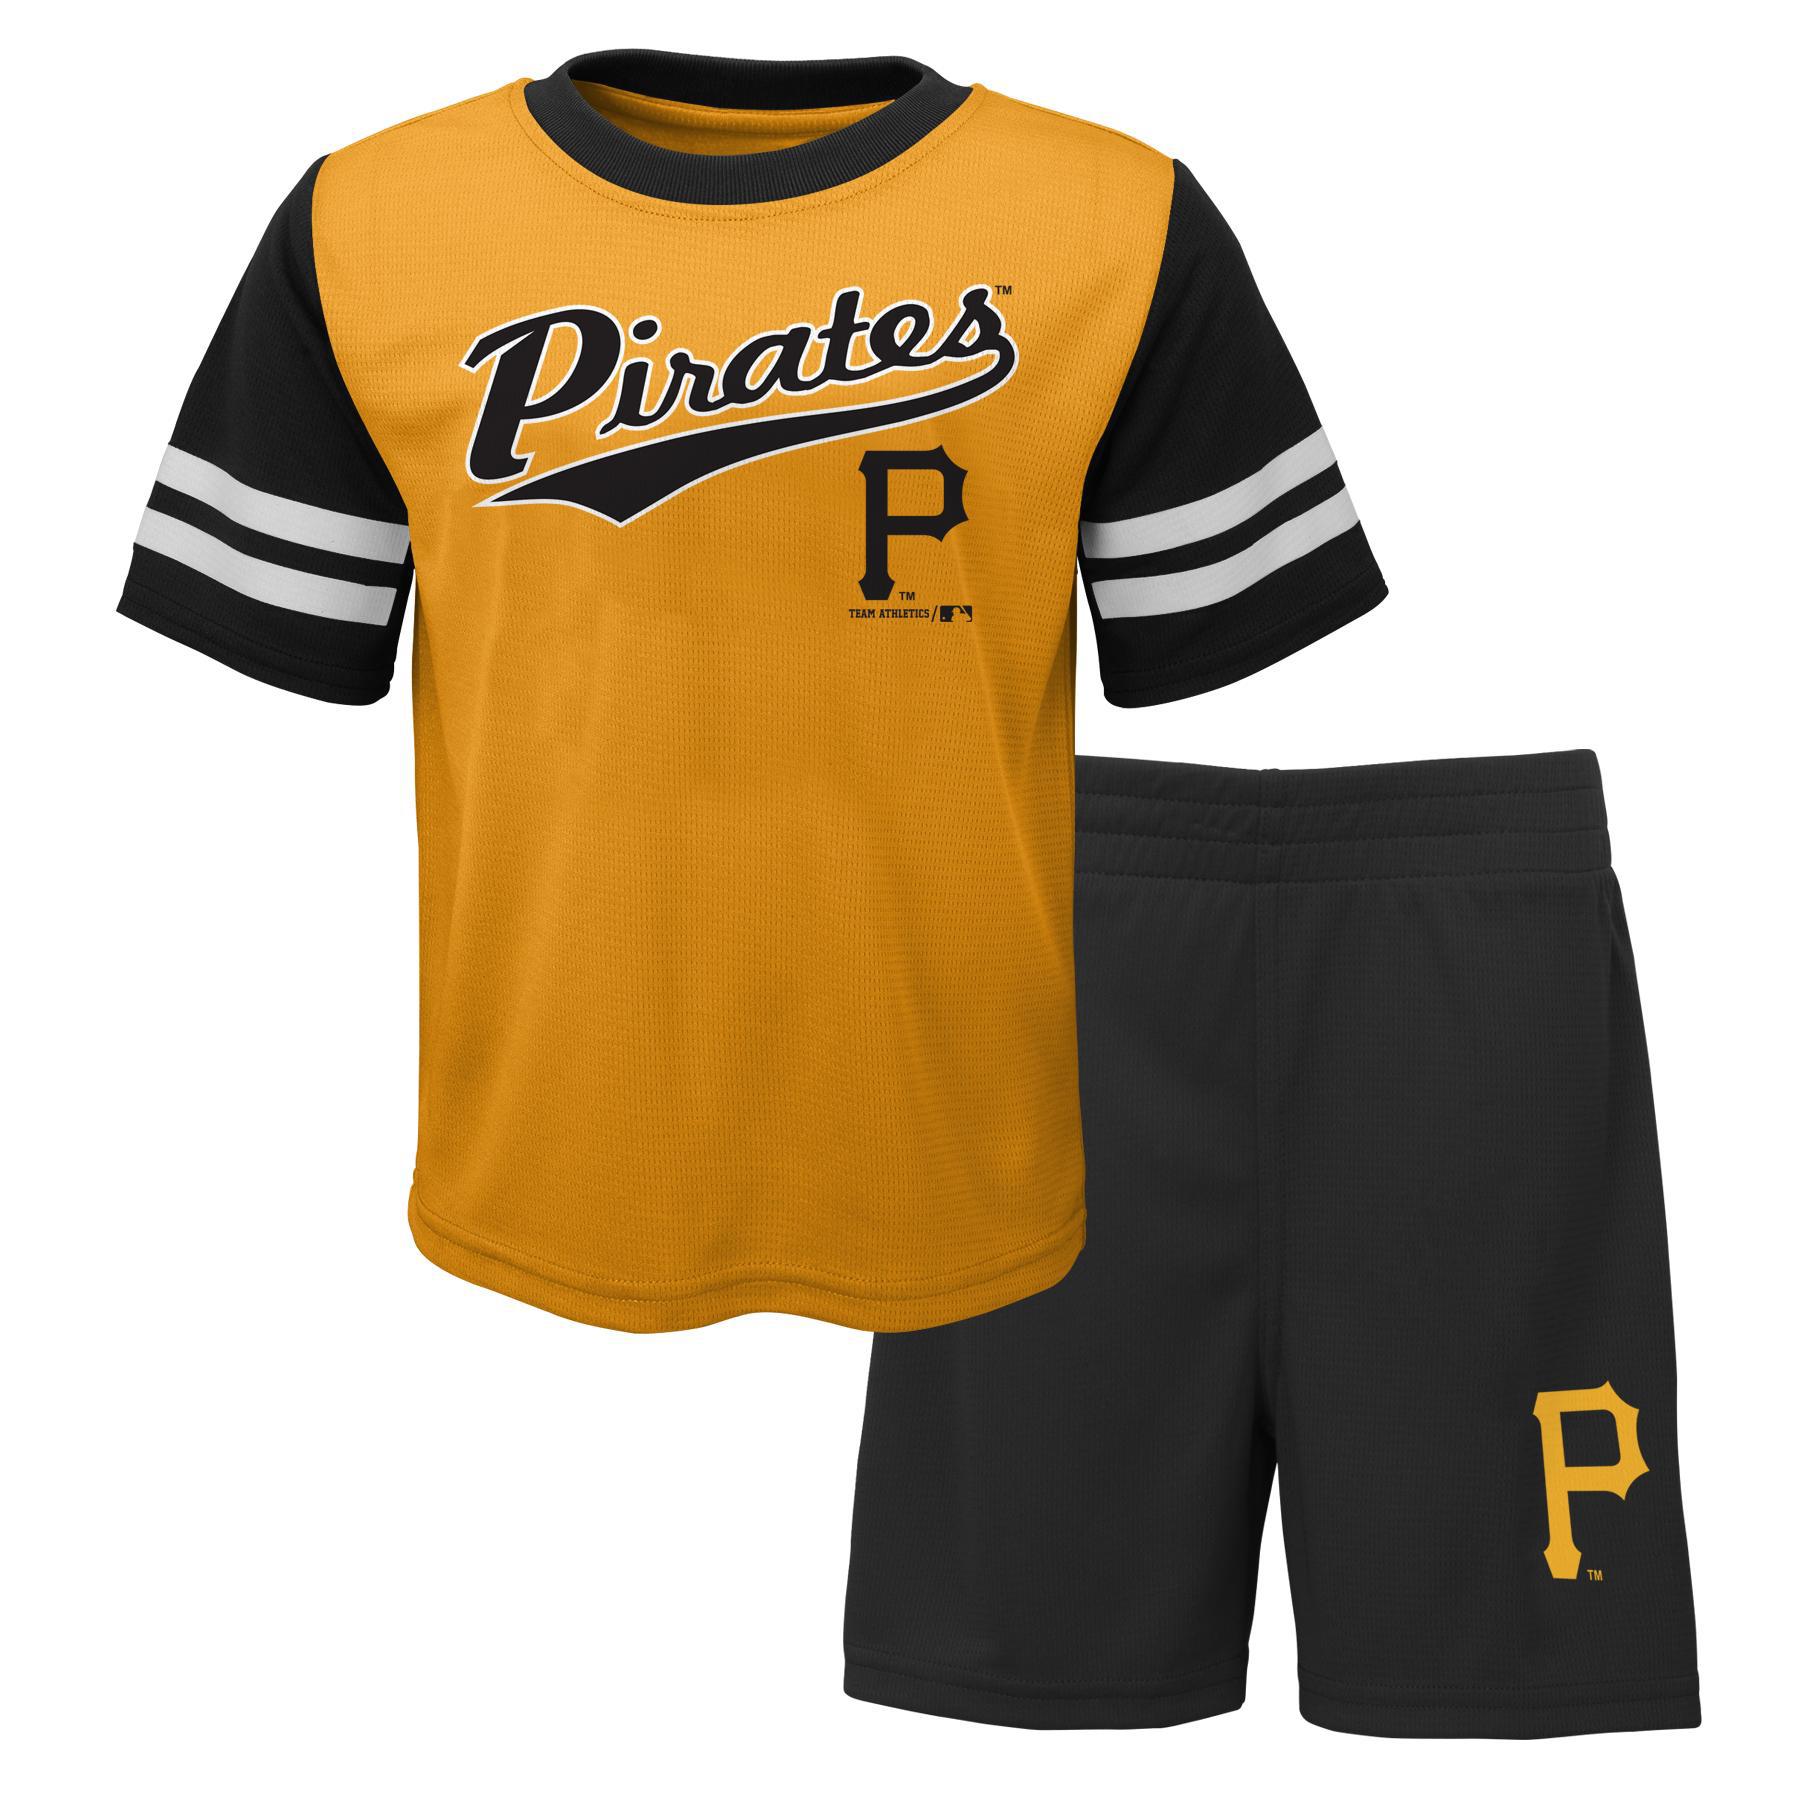 MLB Infant & Toddler Boy's T-Shirt & Shorts - Pittsburgh Pirates